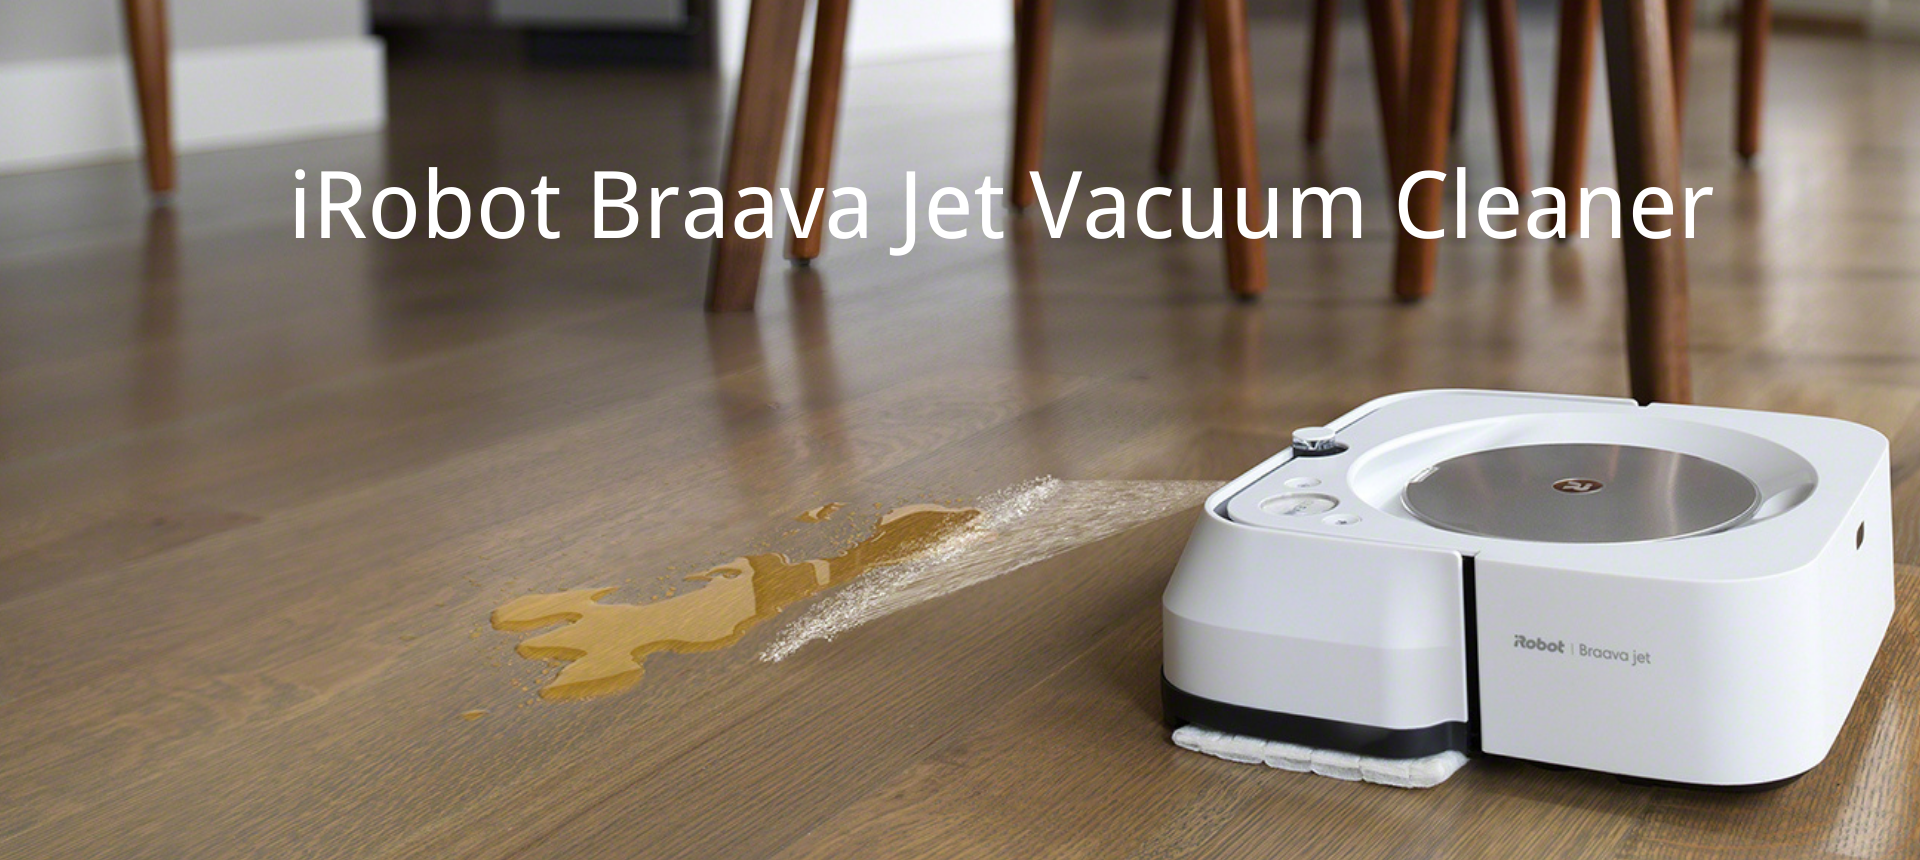 Irobot Braava Jet Review Vacuum Cleaner, Robot Mop For Laminate Floors